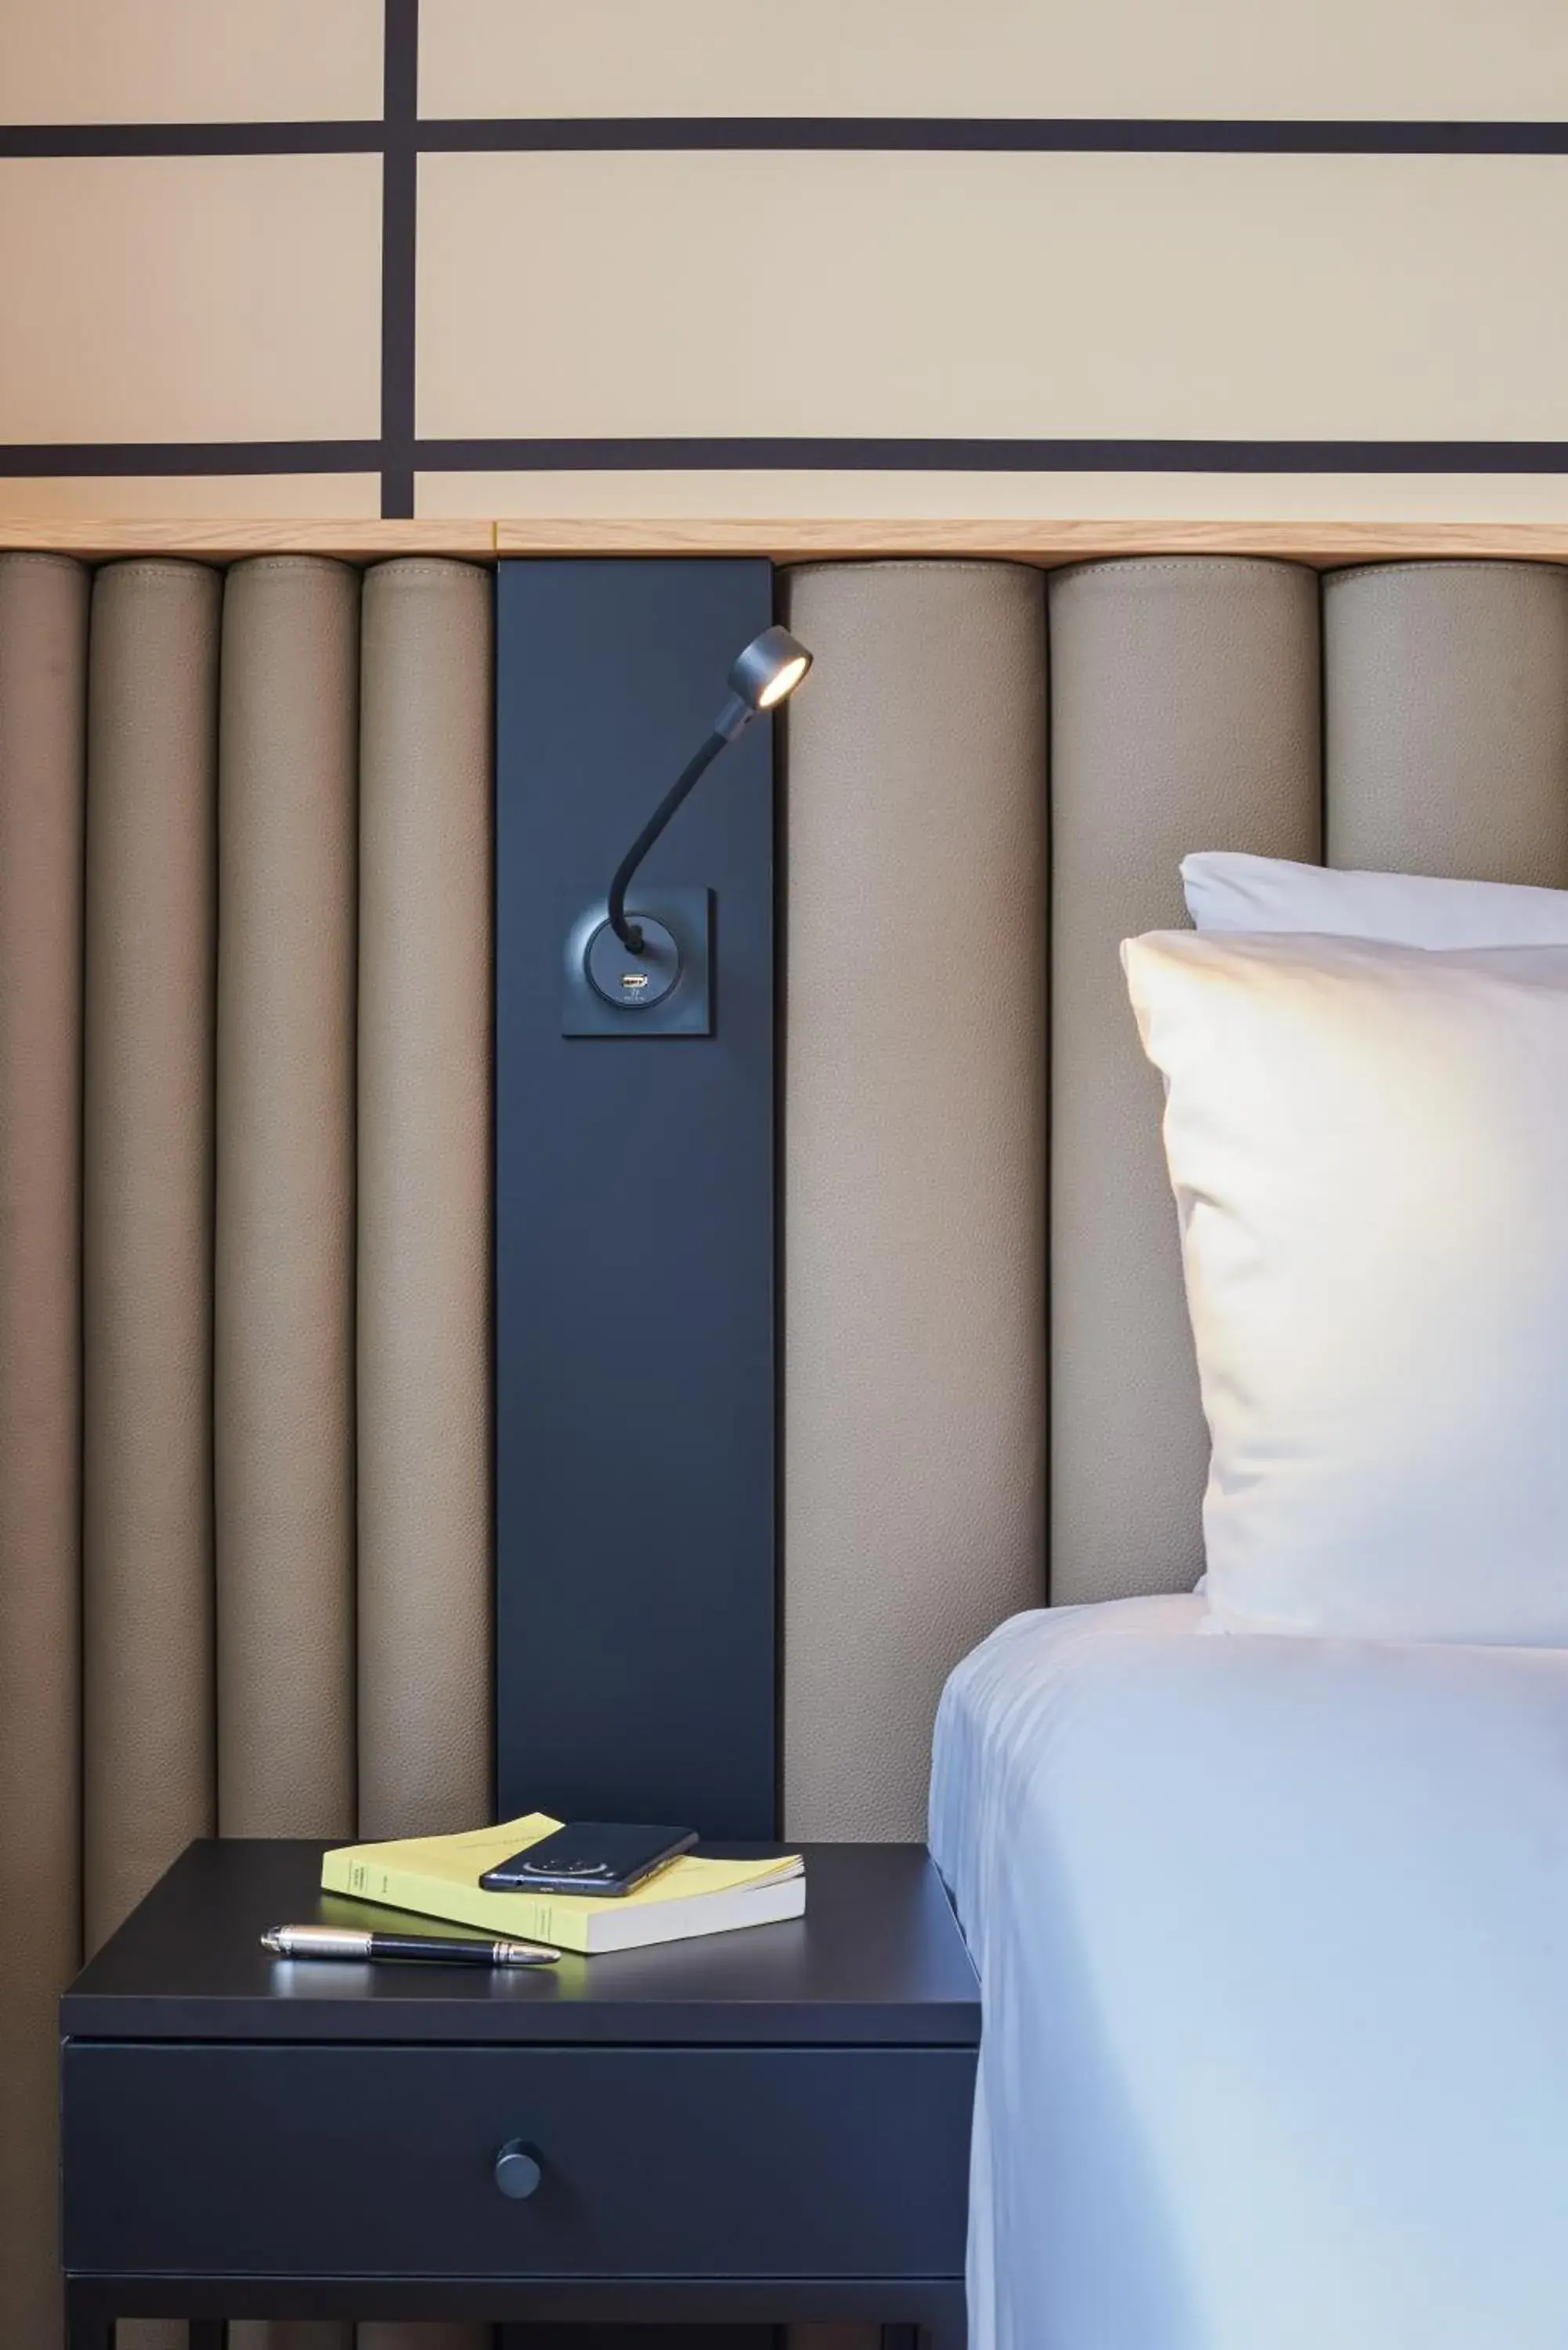 Bed in Qualys - Hotel Nanterre - Paris la DÃ©fense